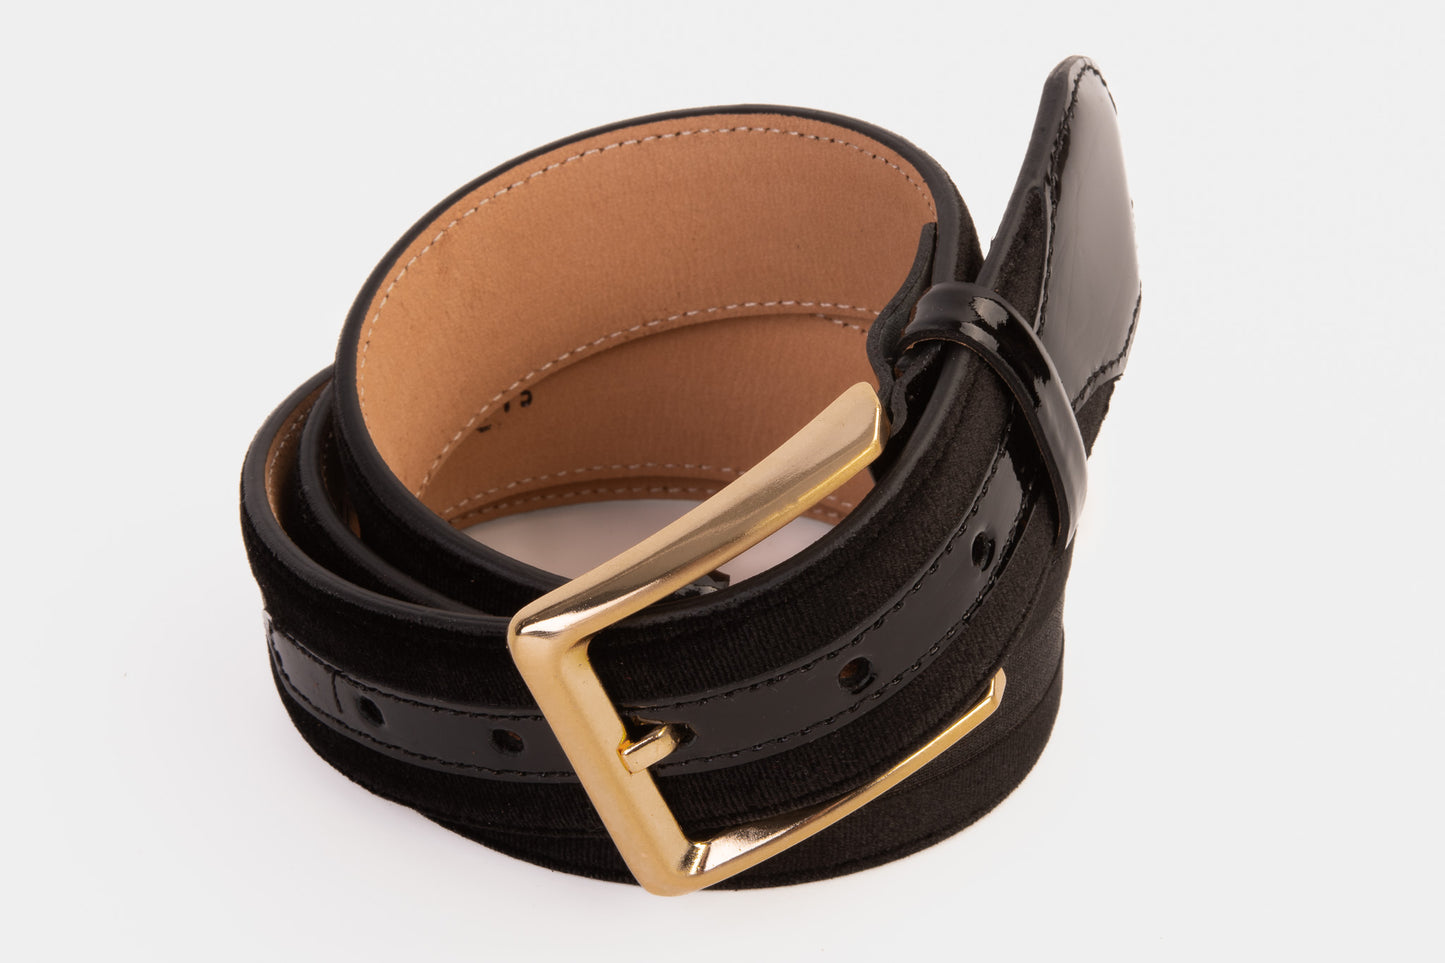 The Pontalto Black Leather Belt